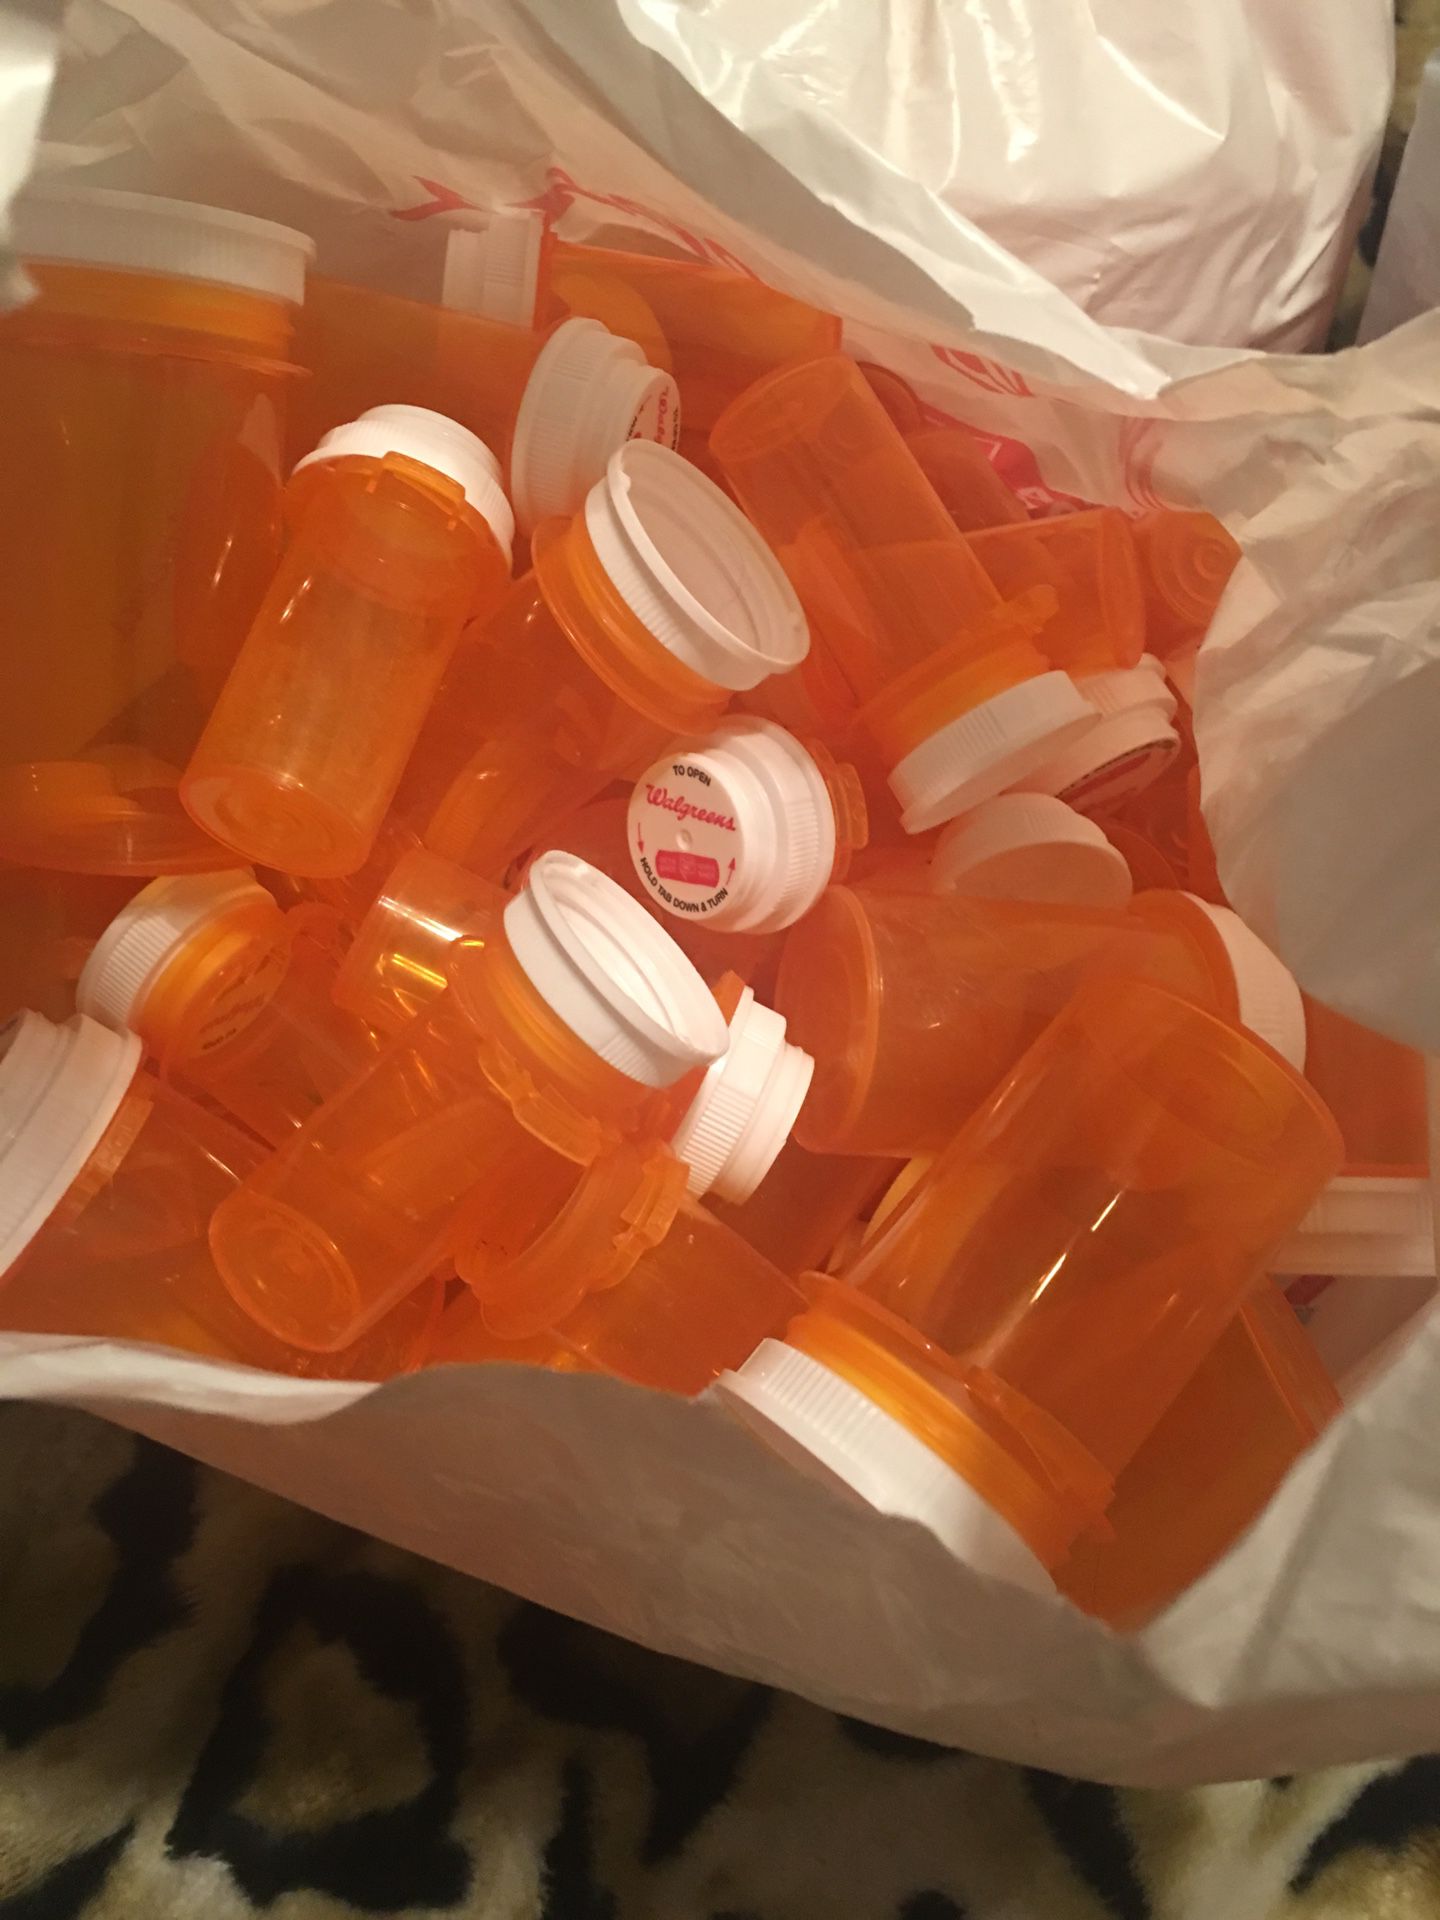 Free empty medicine bottles 3 full bags